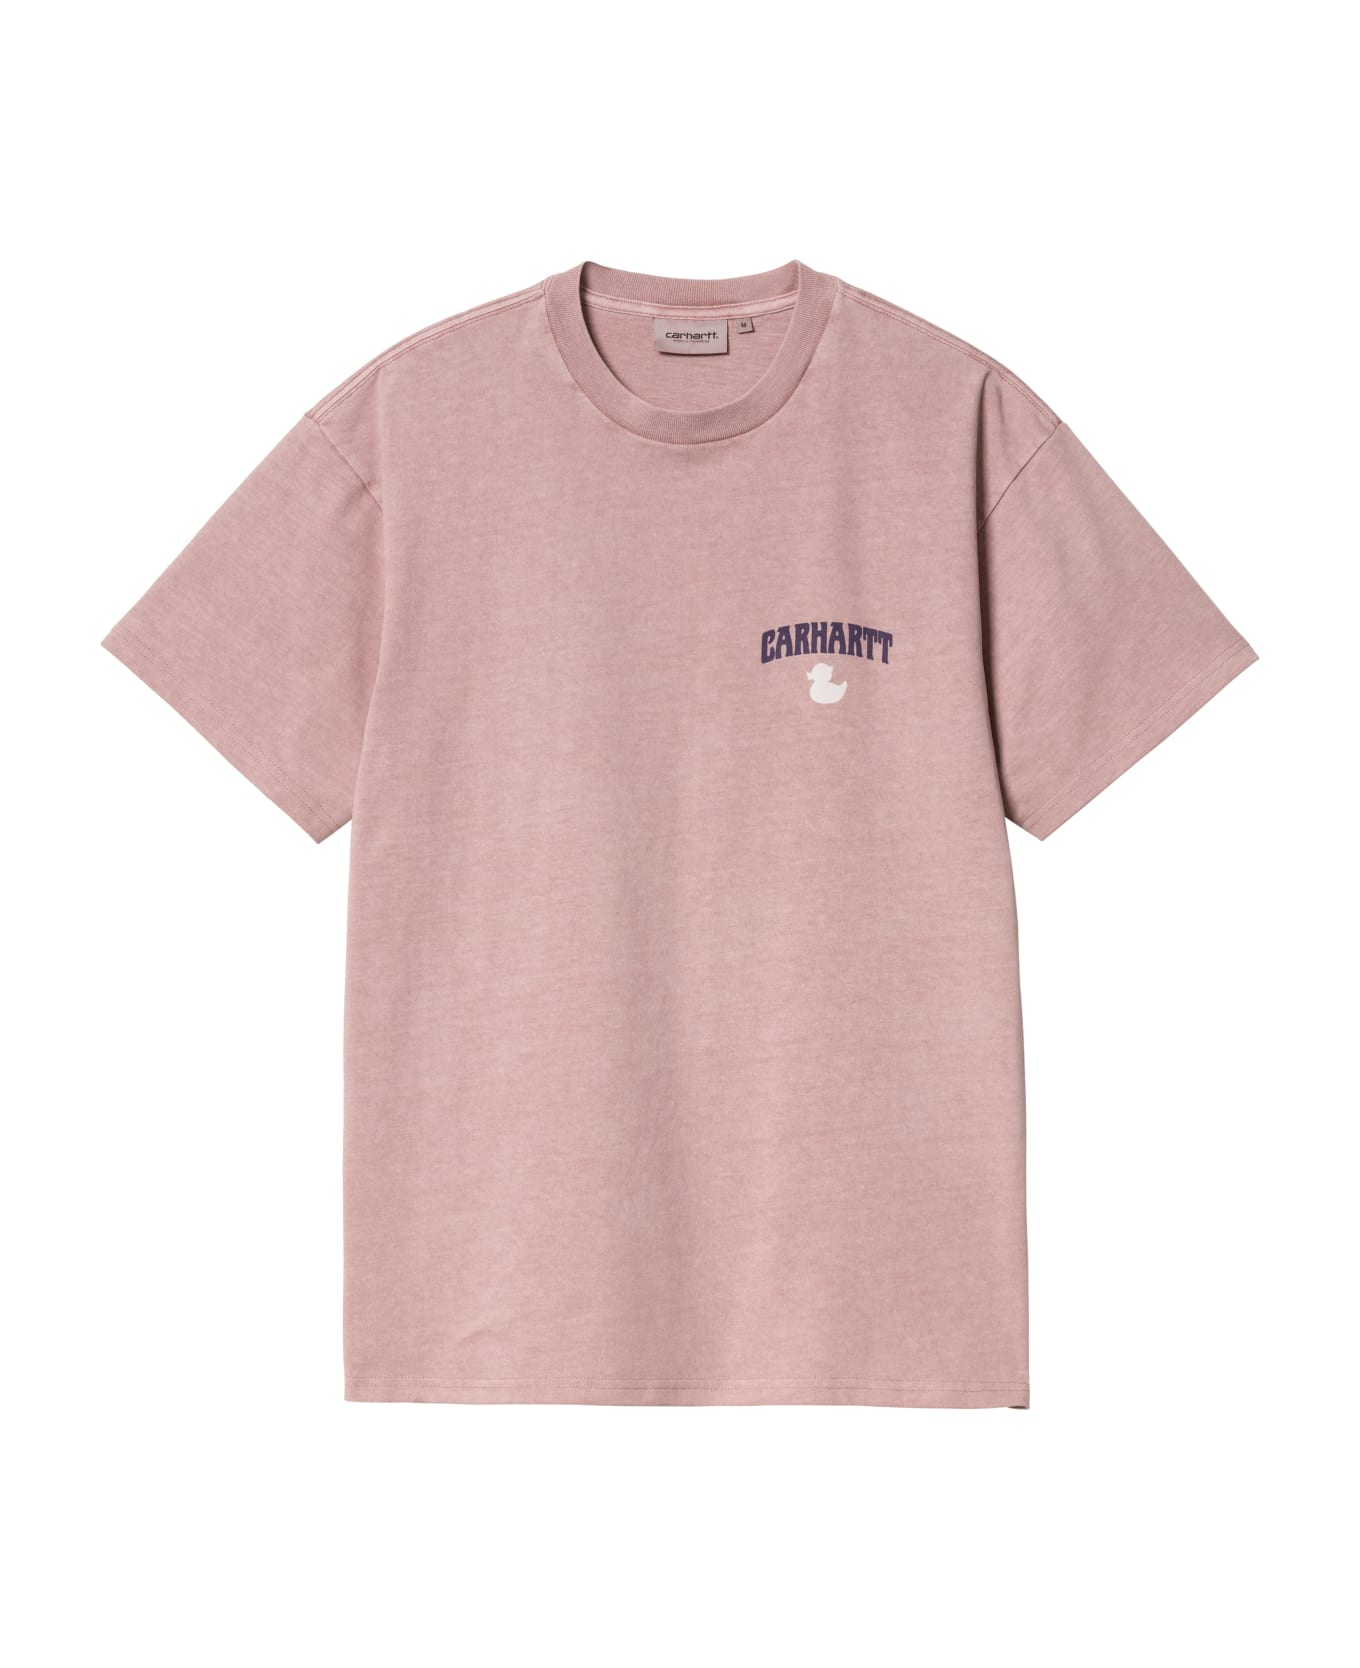 Carhartt S S Duckin T-shirt - Njgd Glassy Pink